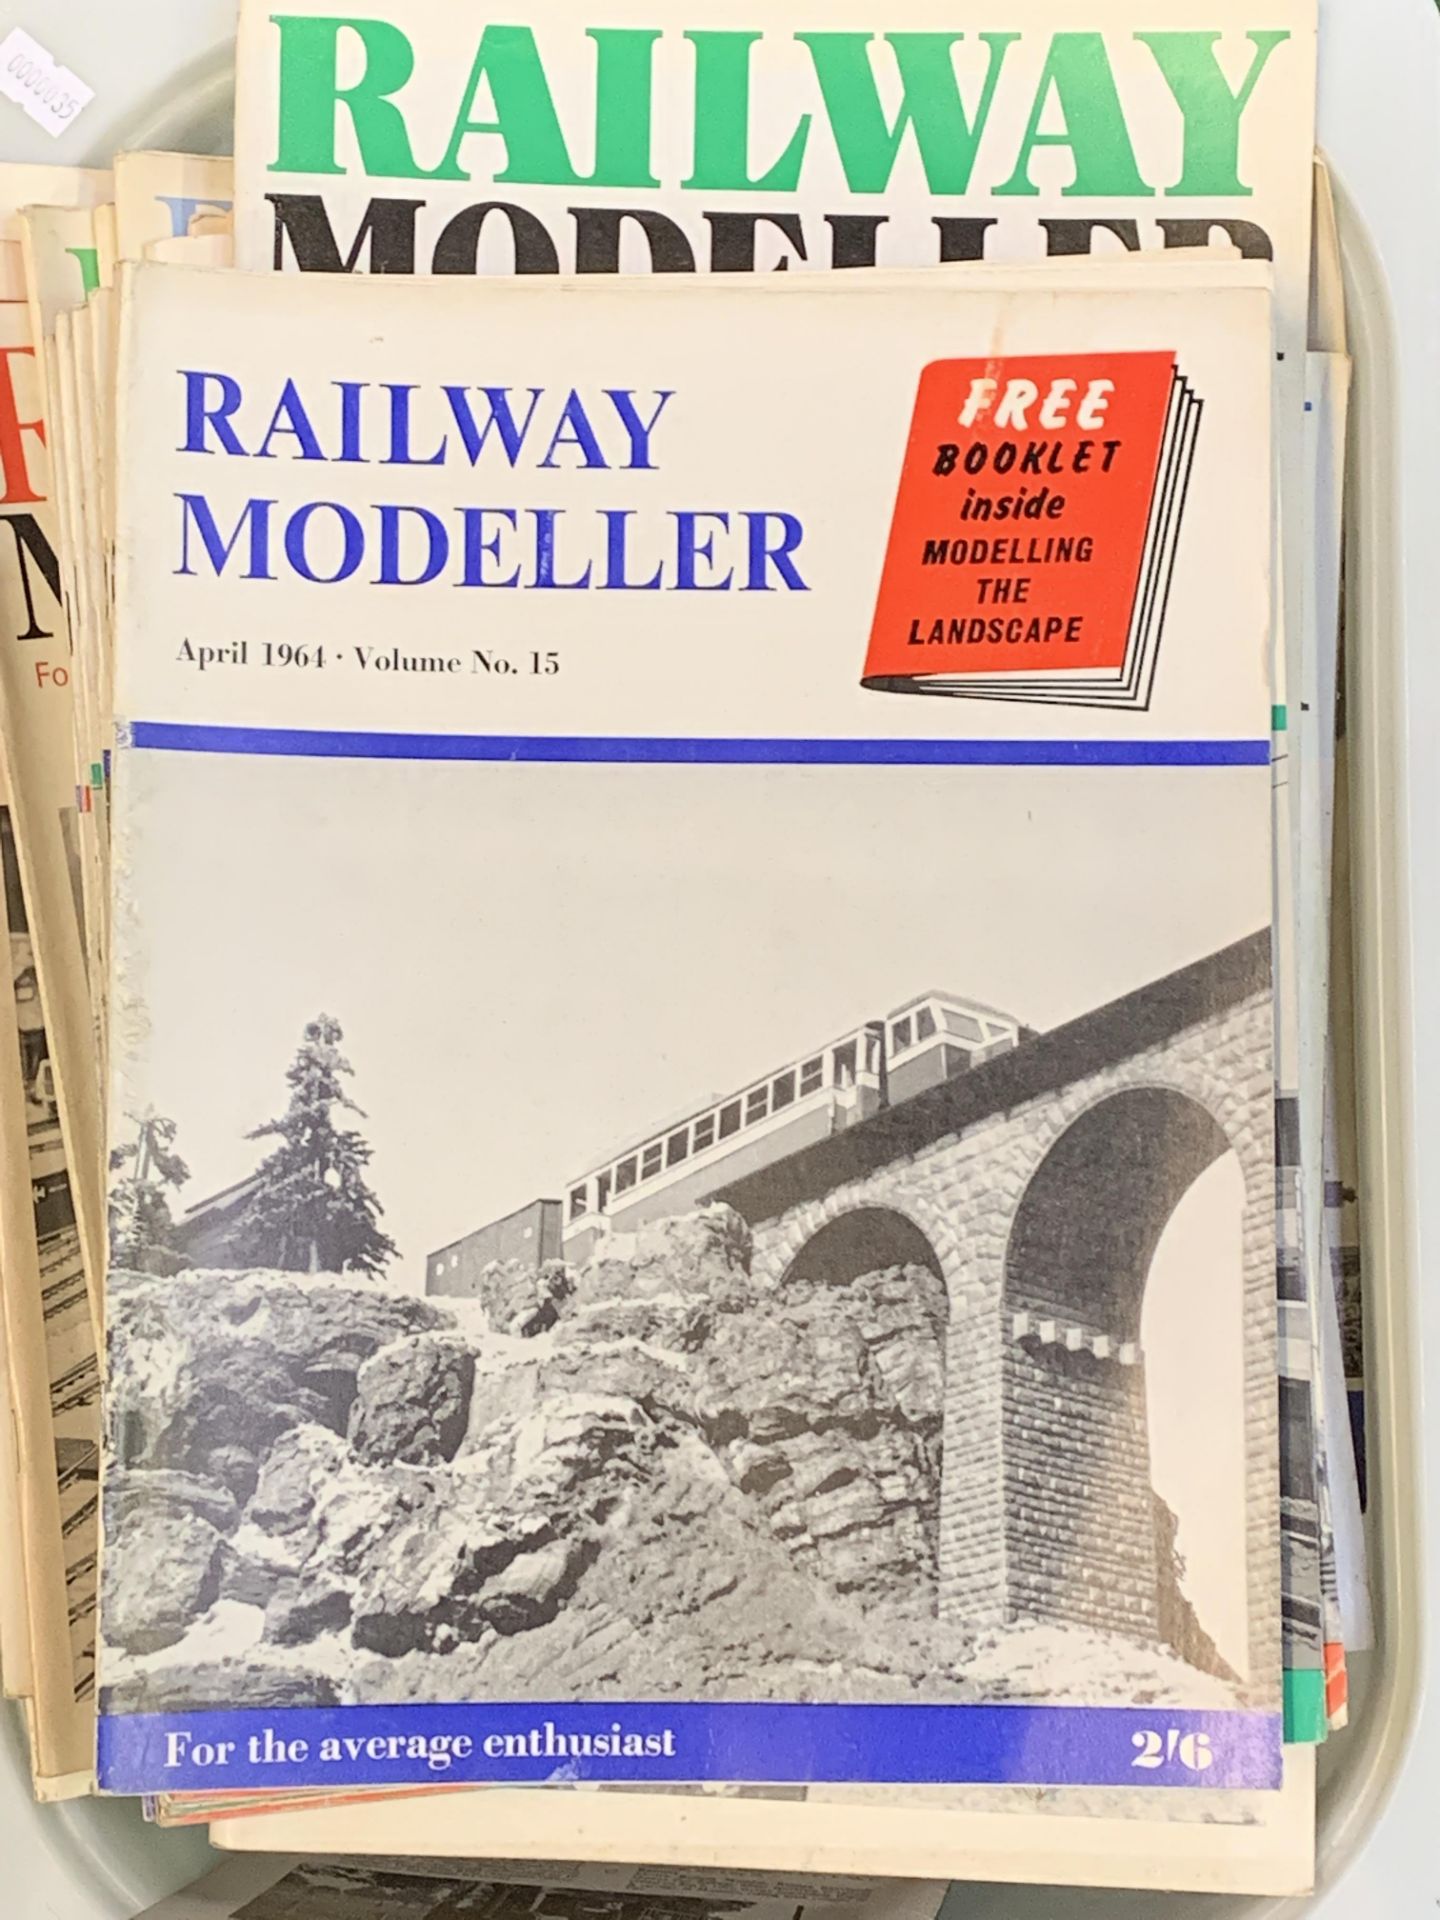 Large quantity of Railway Modeller magazine, together with a few other Railway Modelling magazines